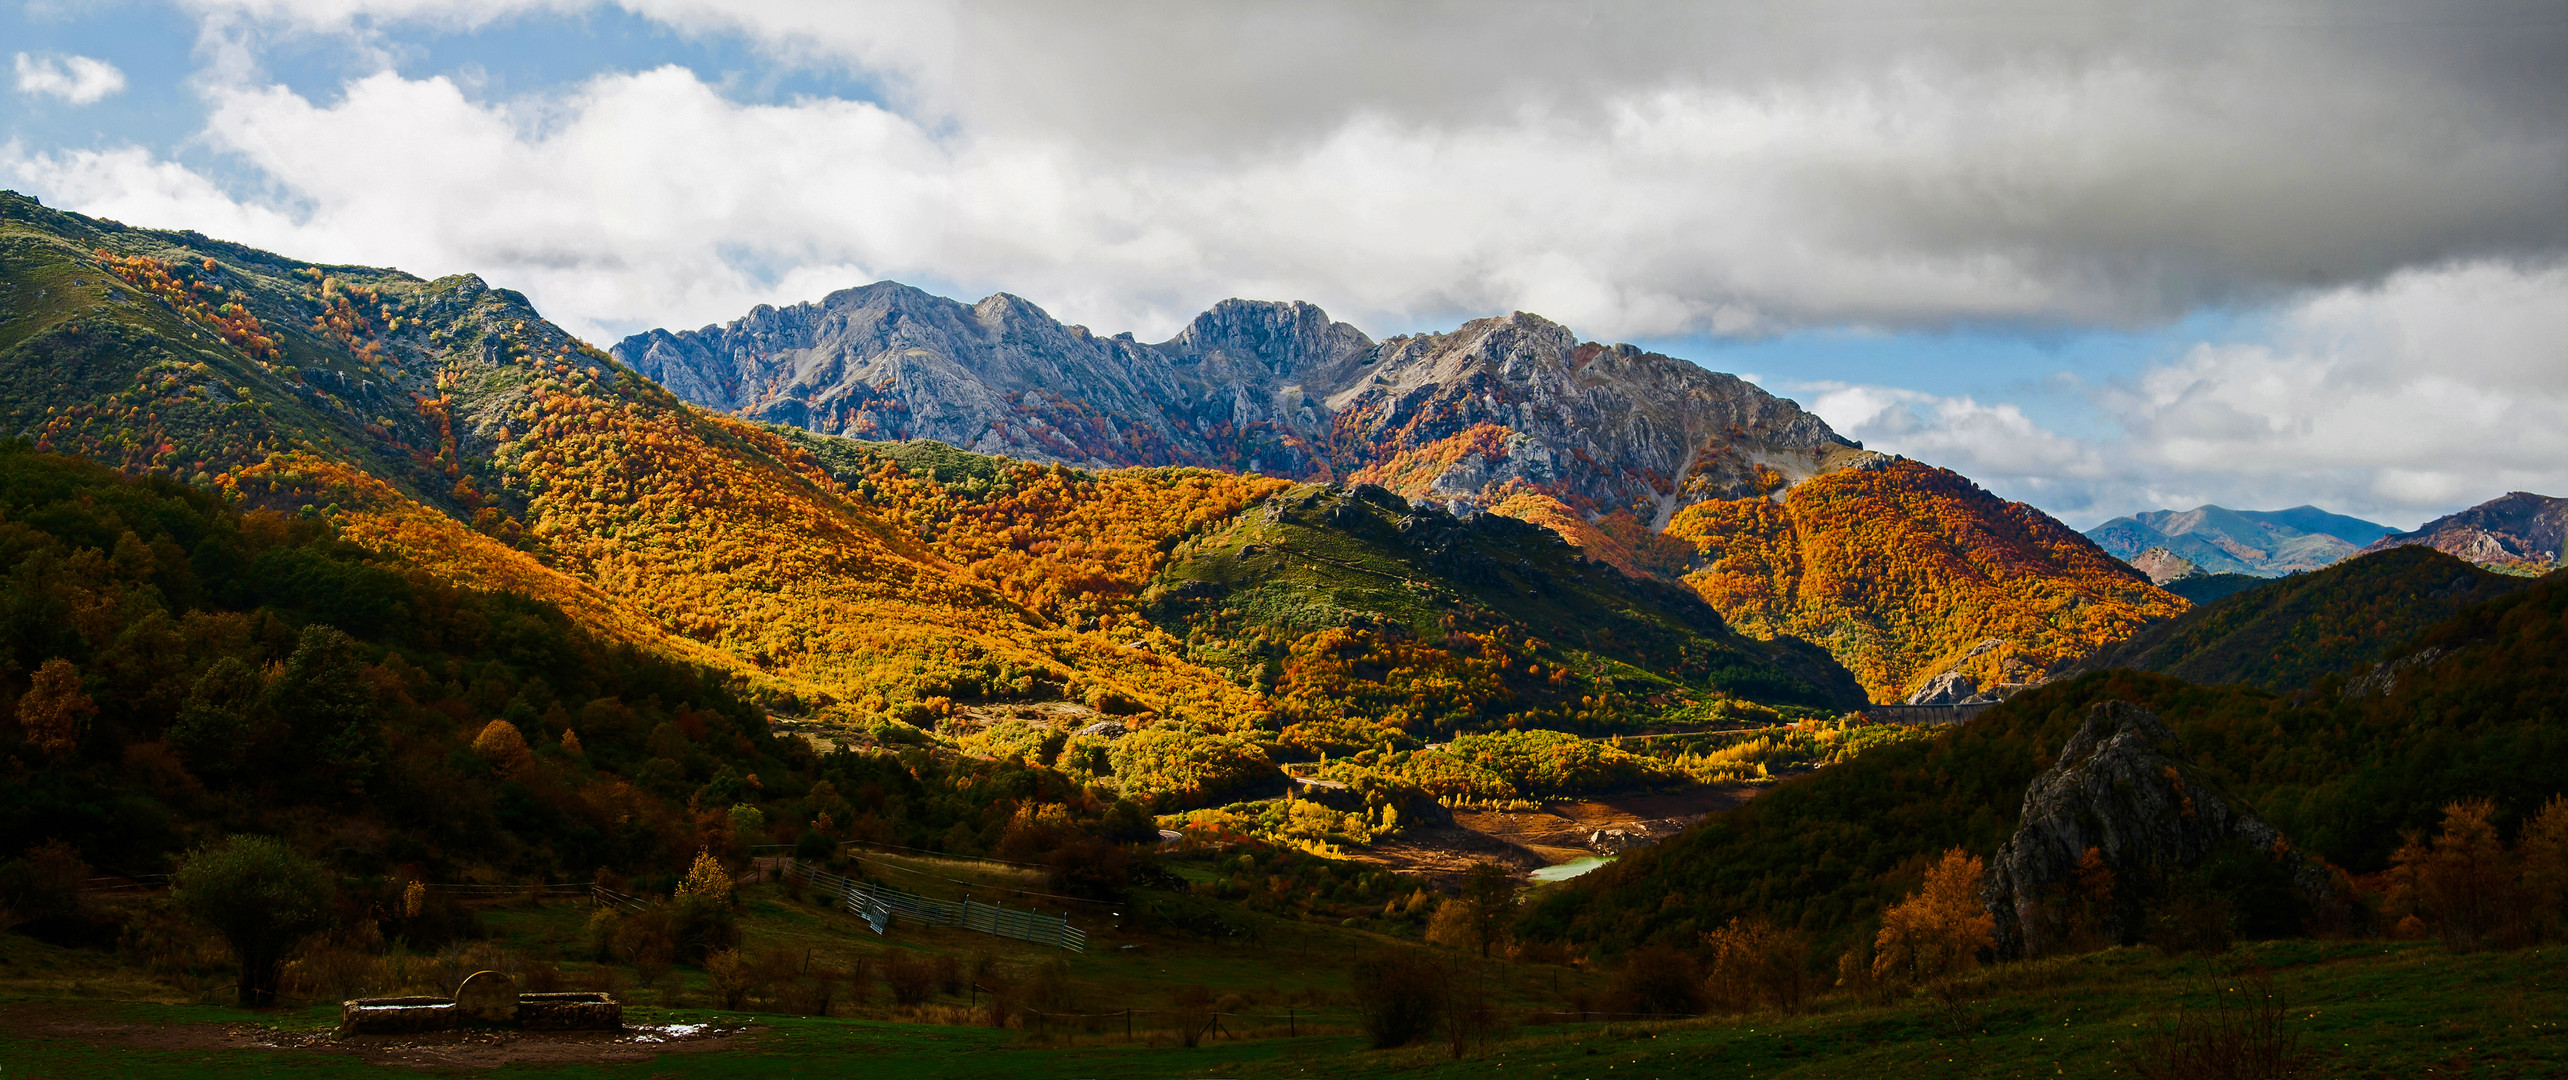 La montaña de Riaño en otoño